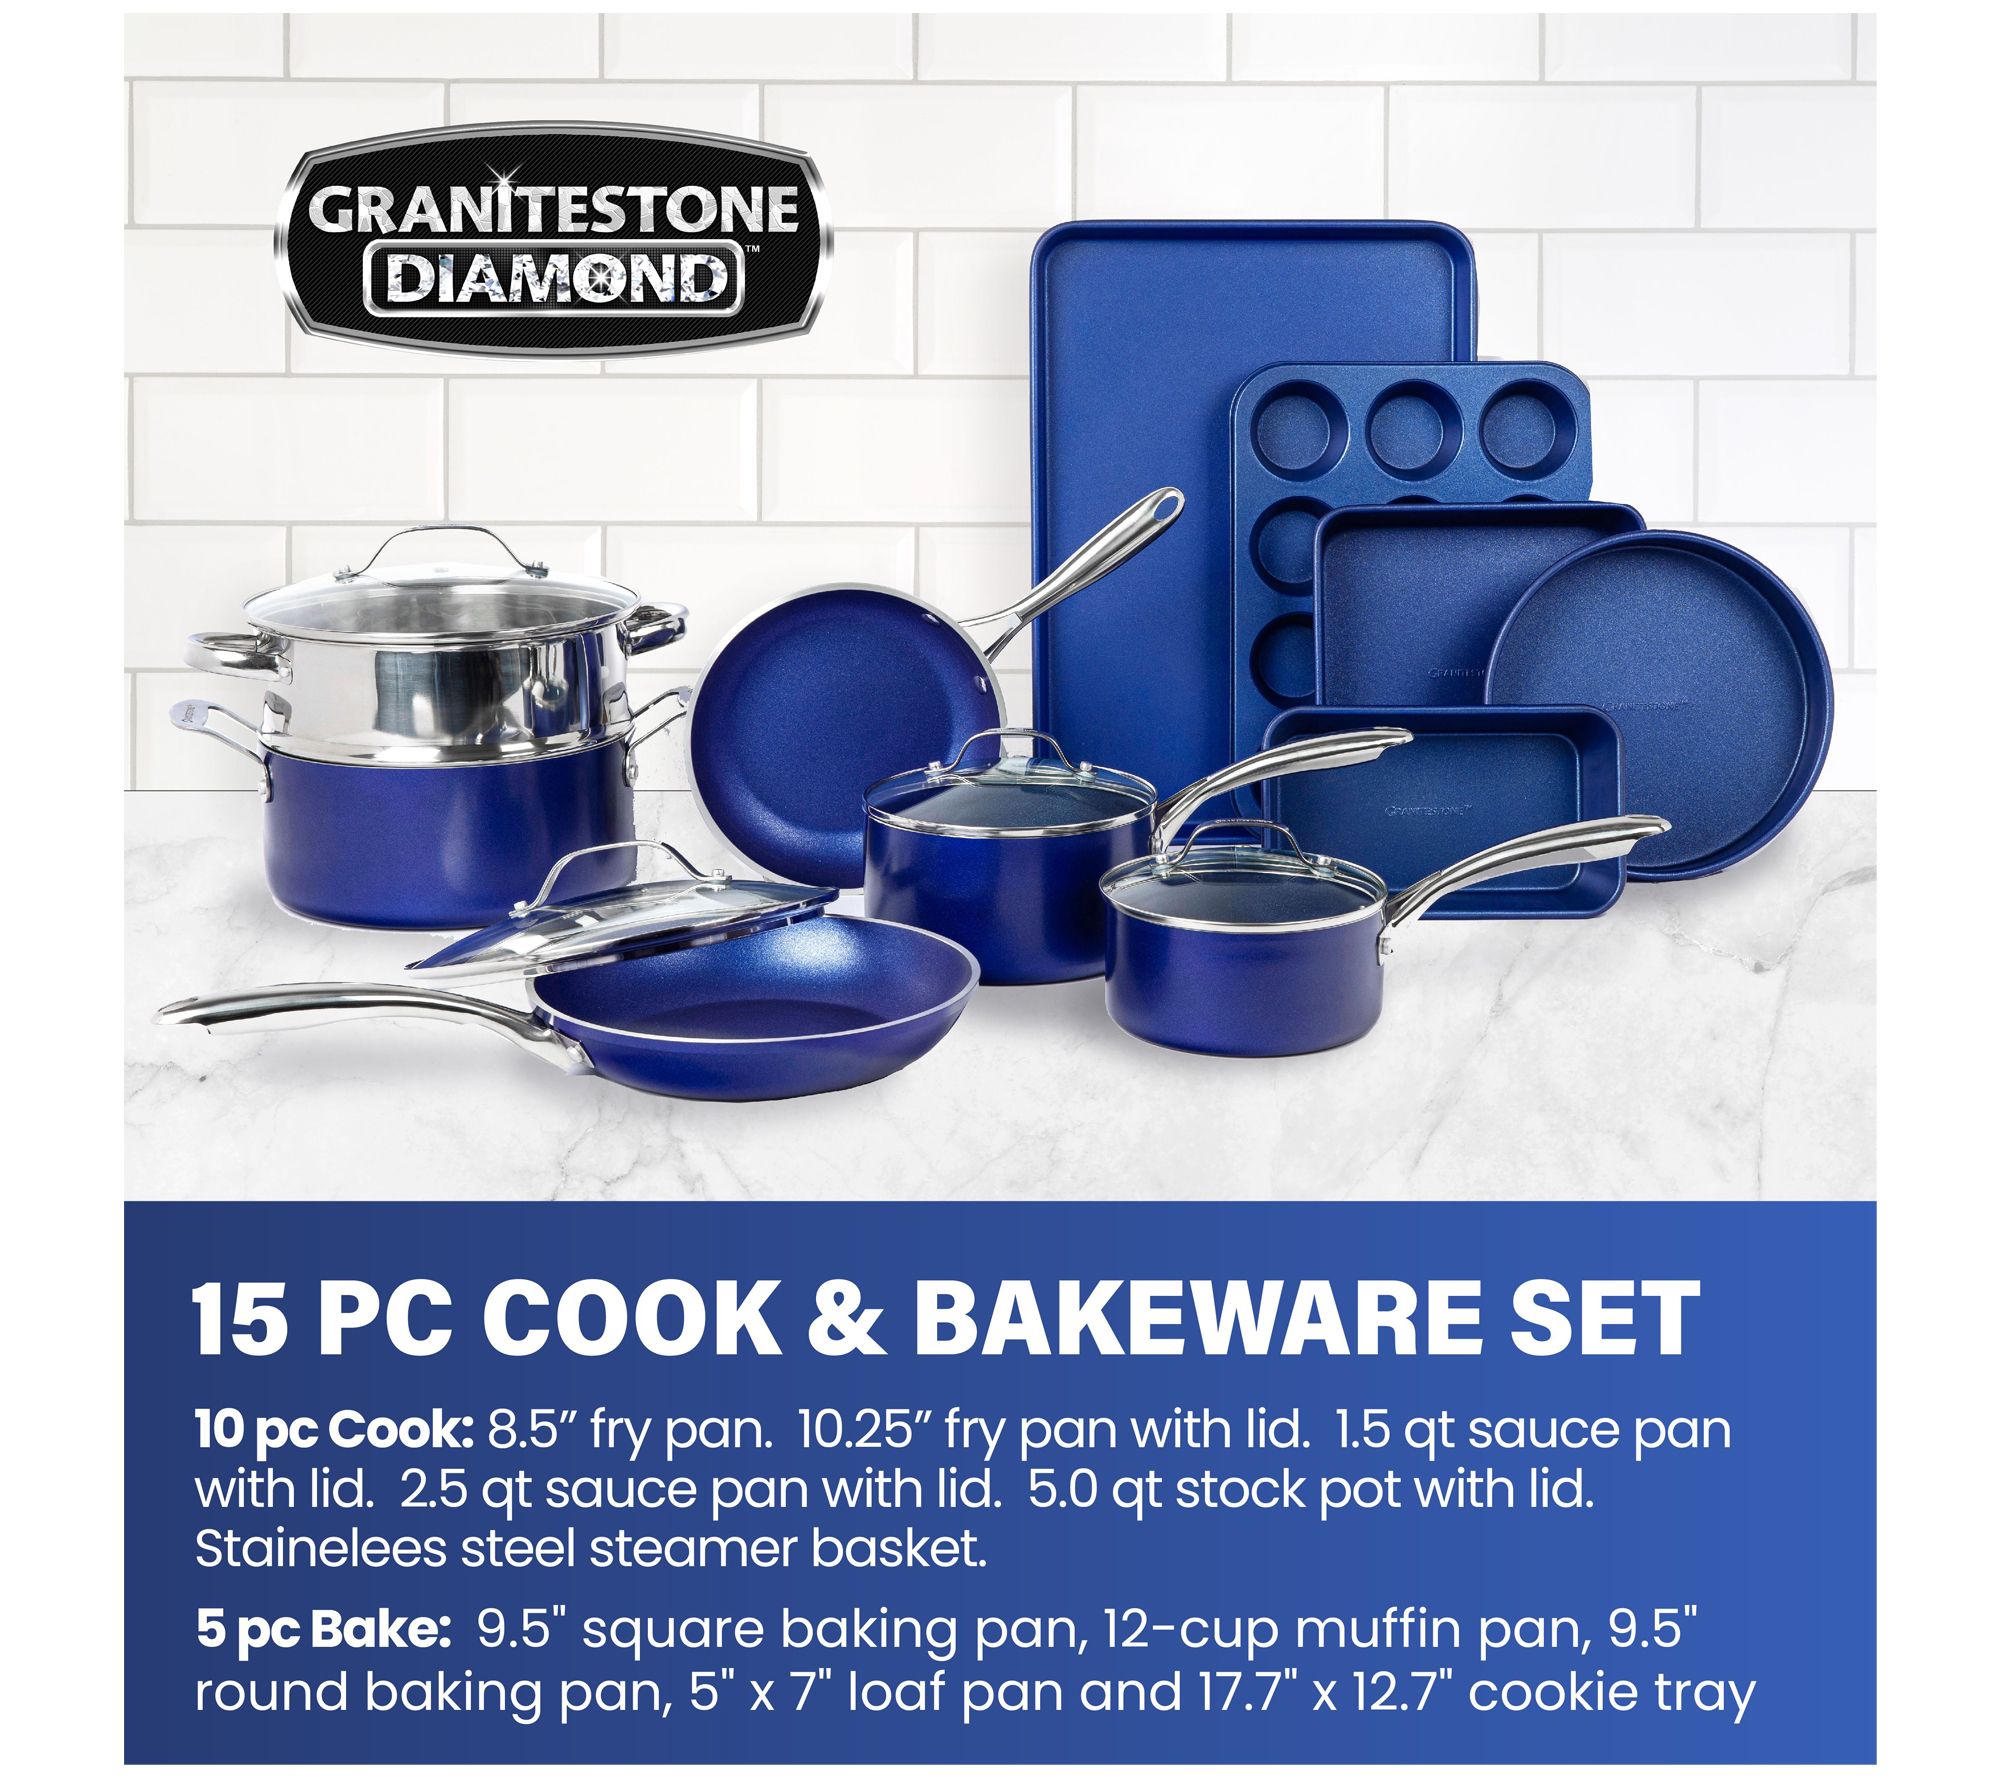 NEW Nonstick Cookware & Bakeware Set Granite Stone 15 Piece All in One Kitchen 